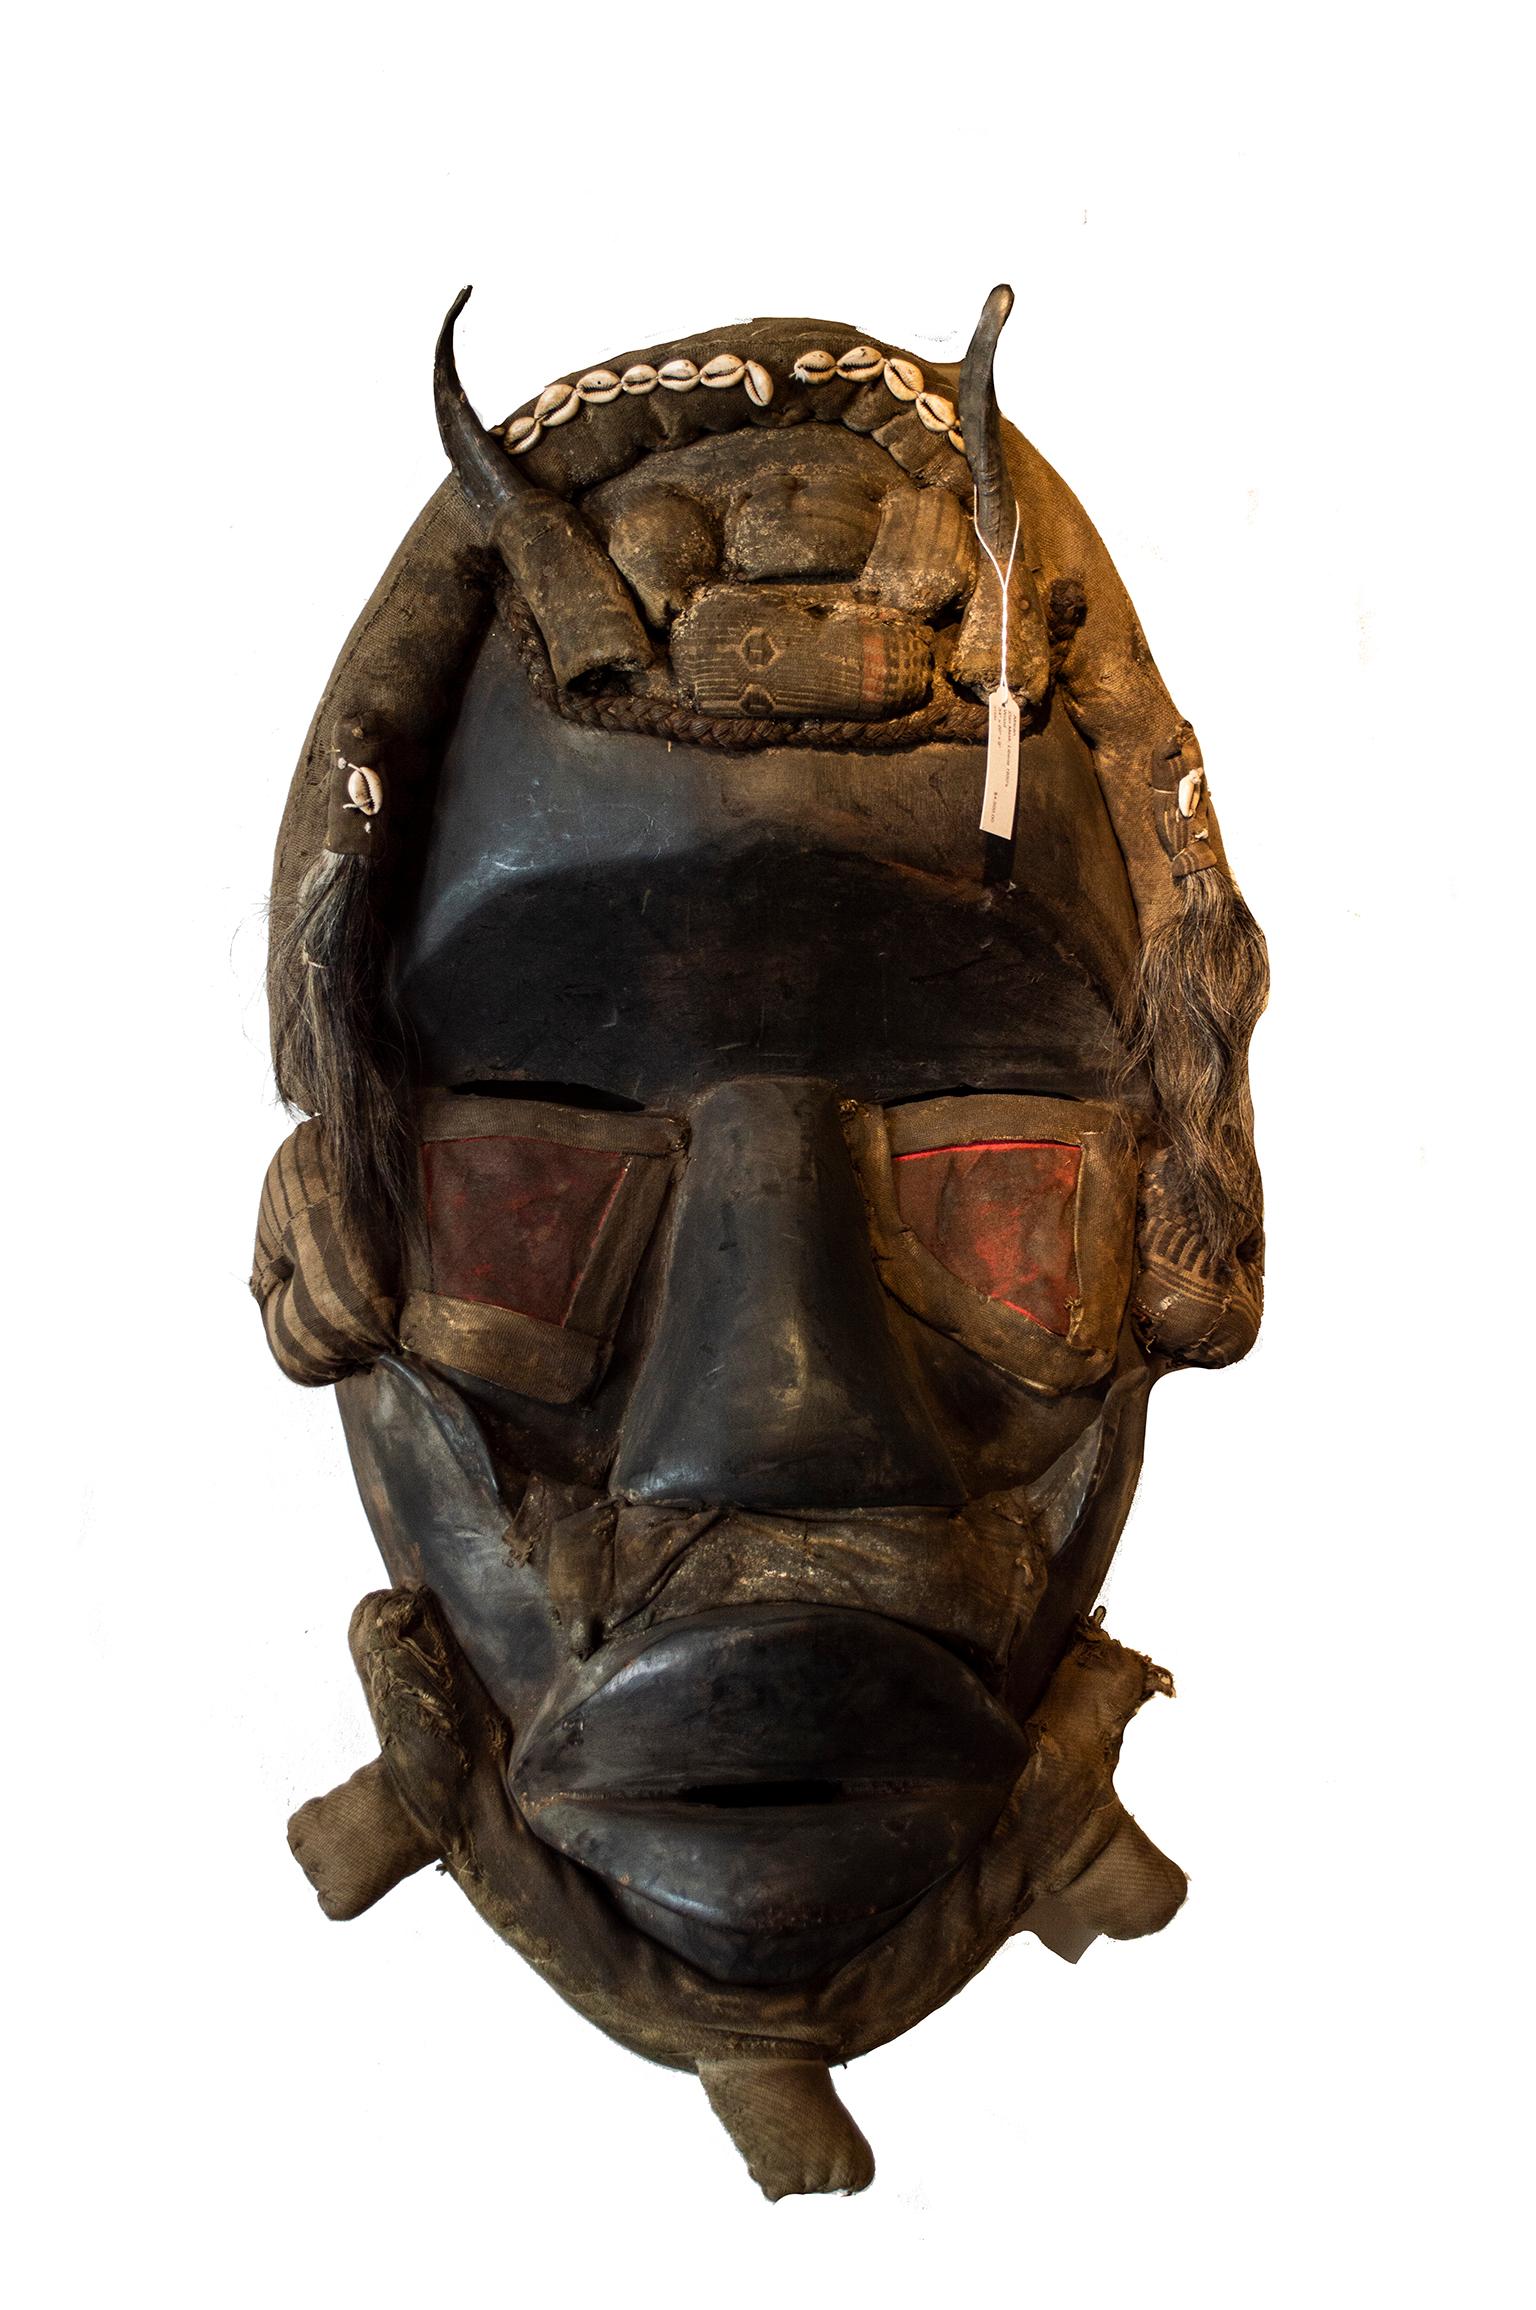 Unknown Figurative Sculpture - "Dan Mask, " Carved Wood created in Liberia circa the 1950s